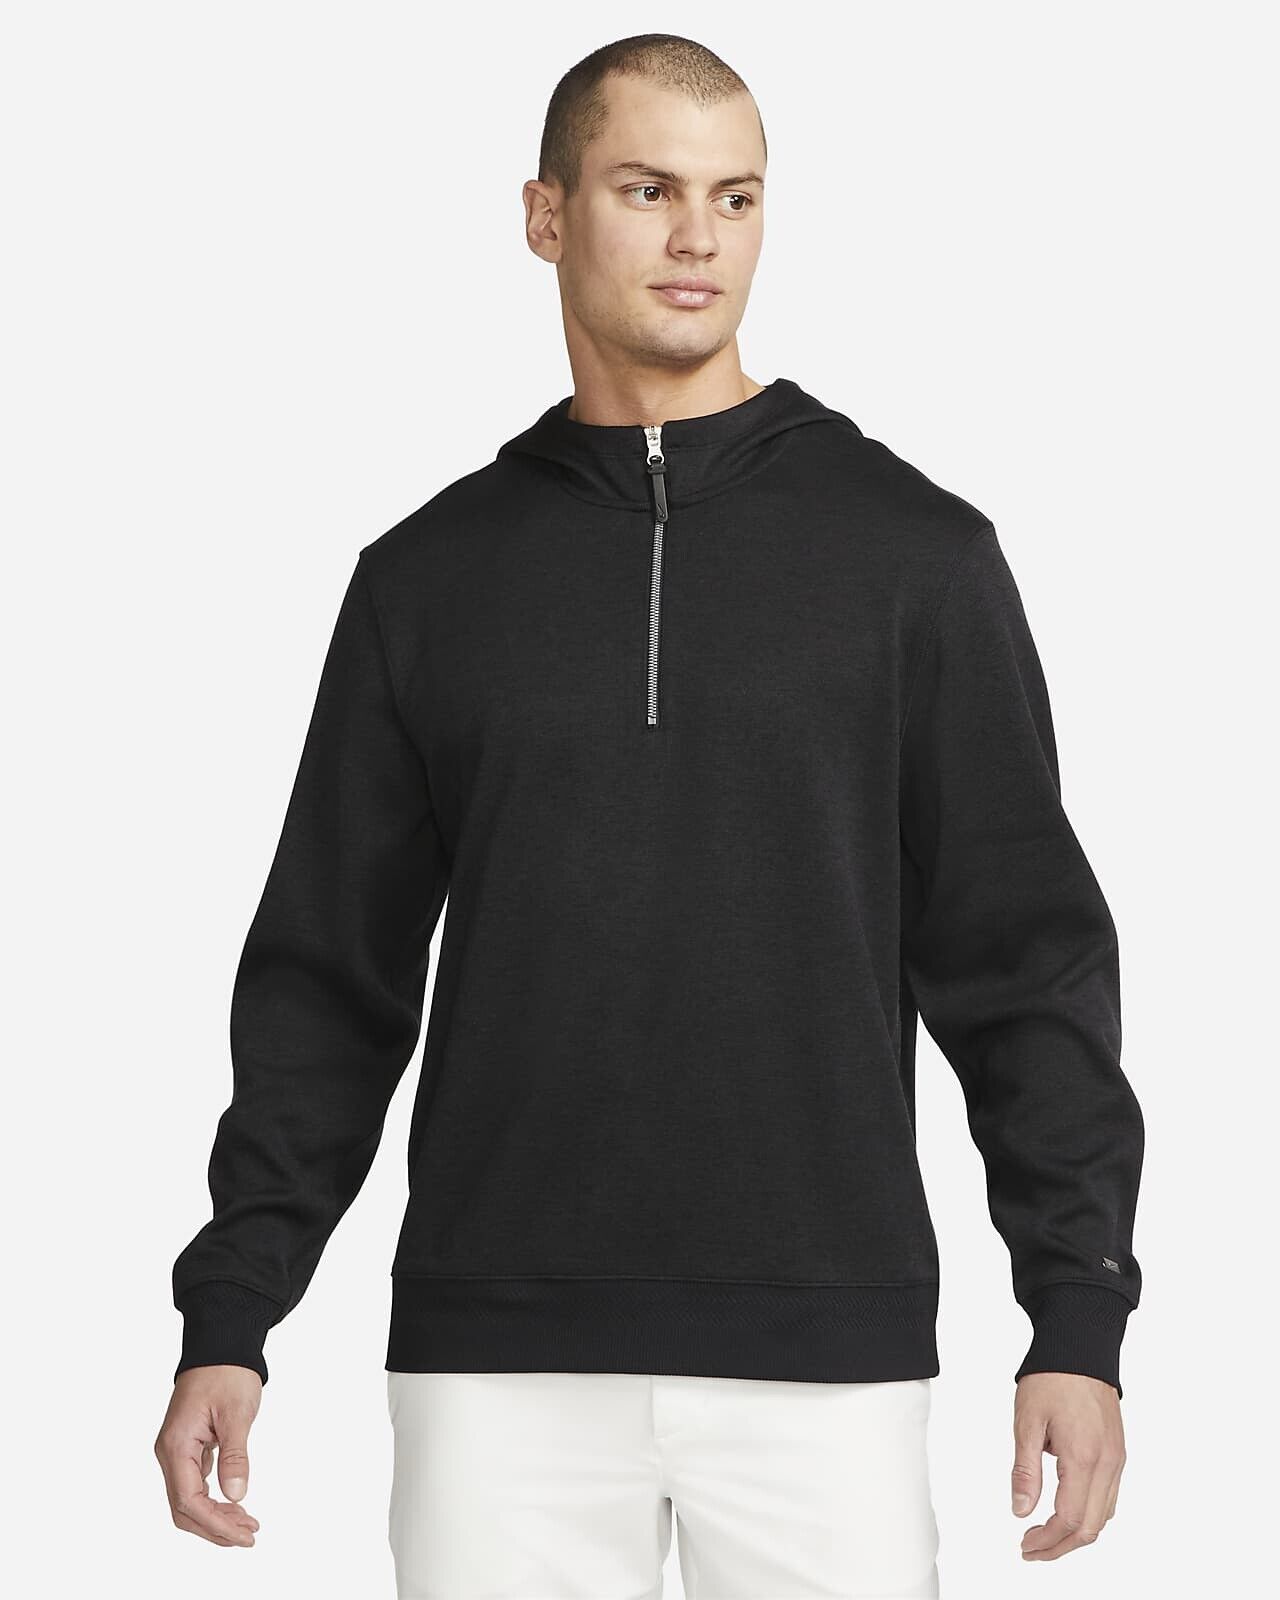 Nike Dri-FIT Men\'s Golf Hoodie 1/4 Zip Pullover Black Size XL $115 DN1906-010